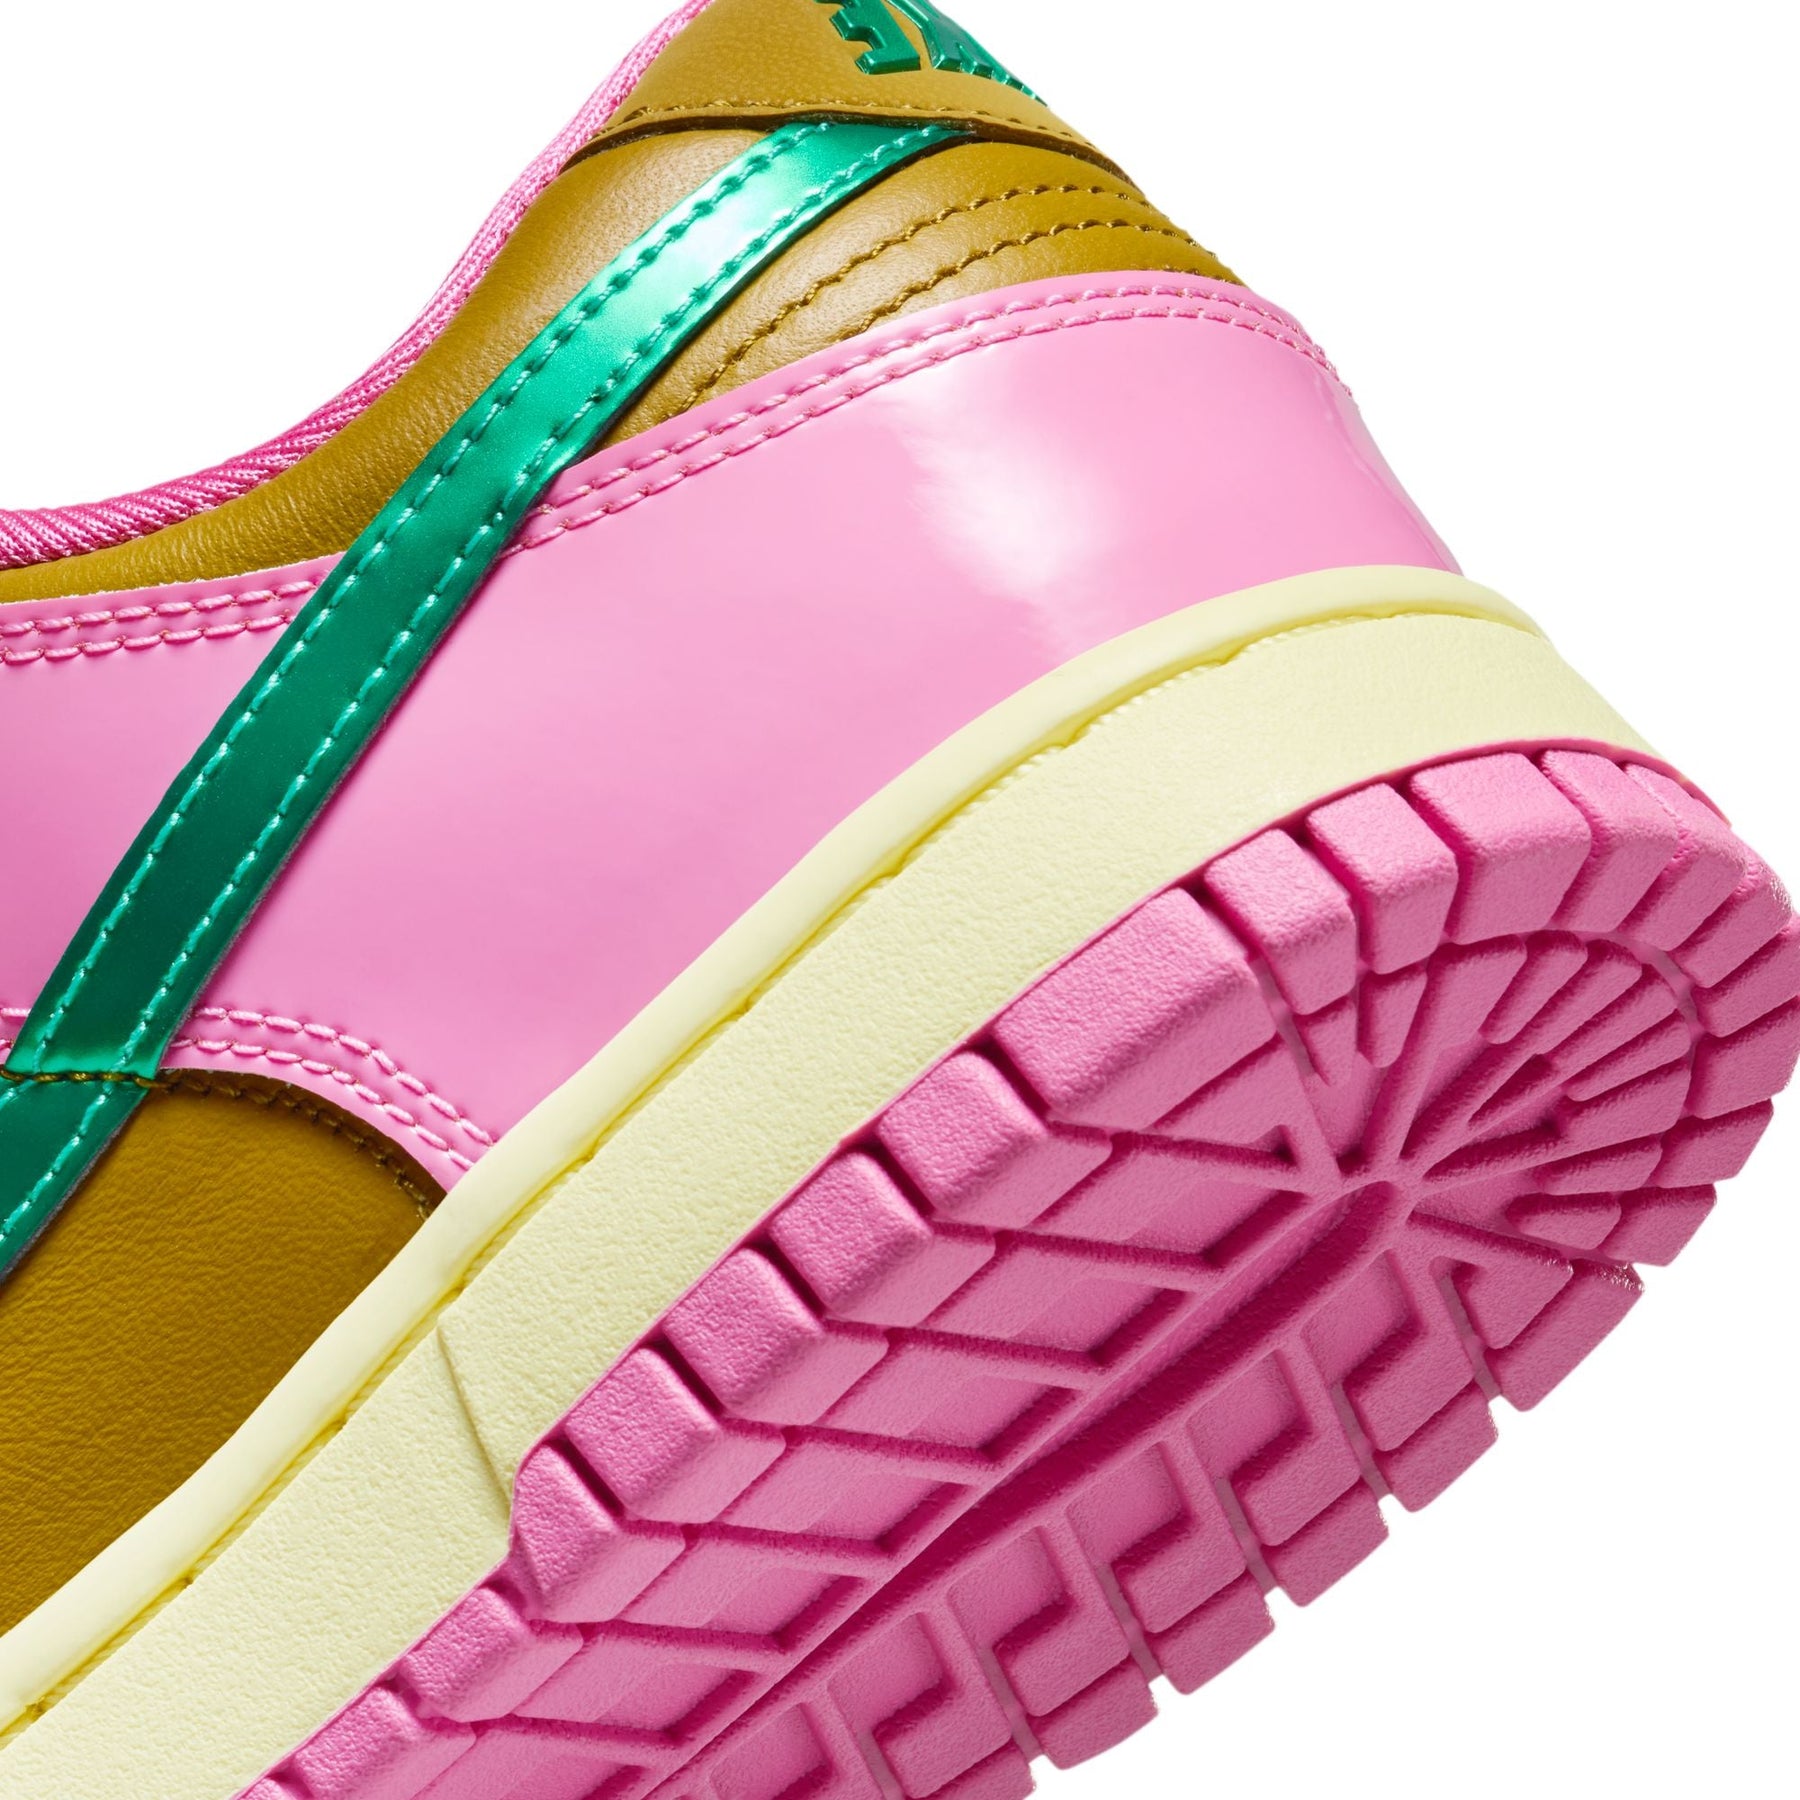 WMNS Nike Dunk Low x Parris Goebel "Playful Pink"